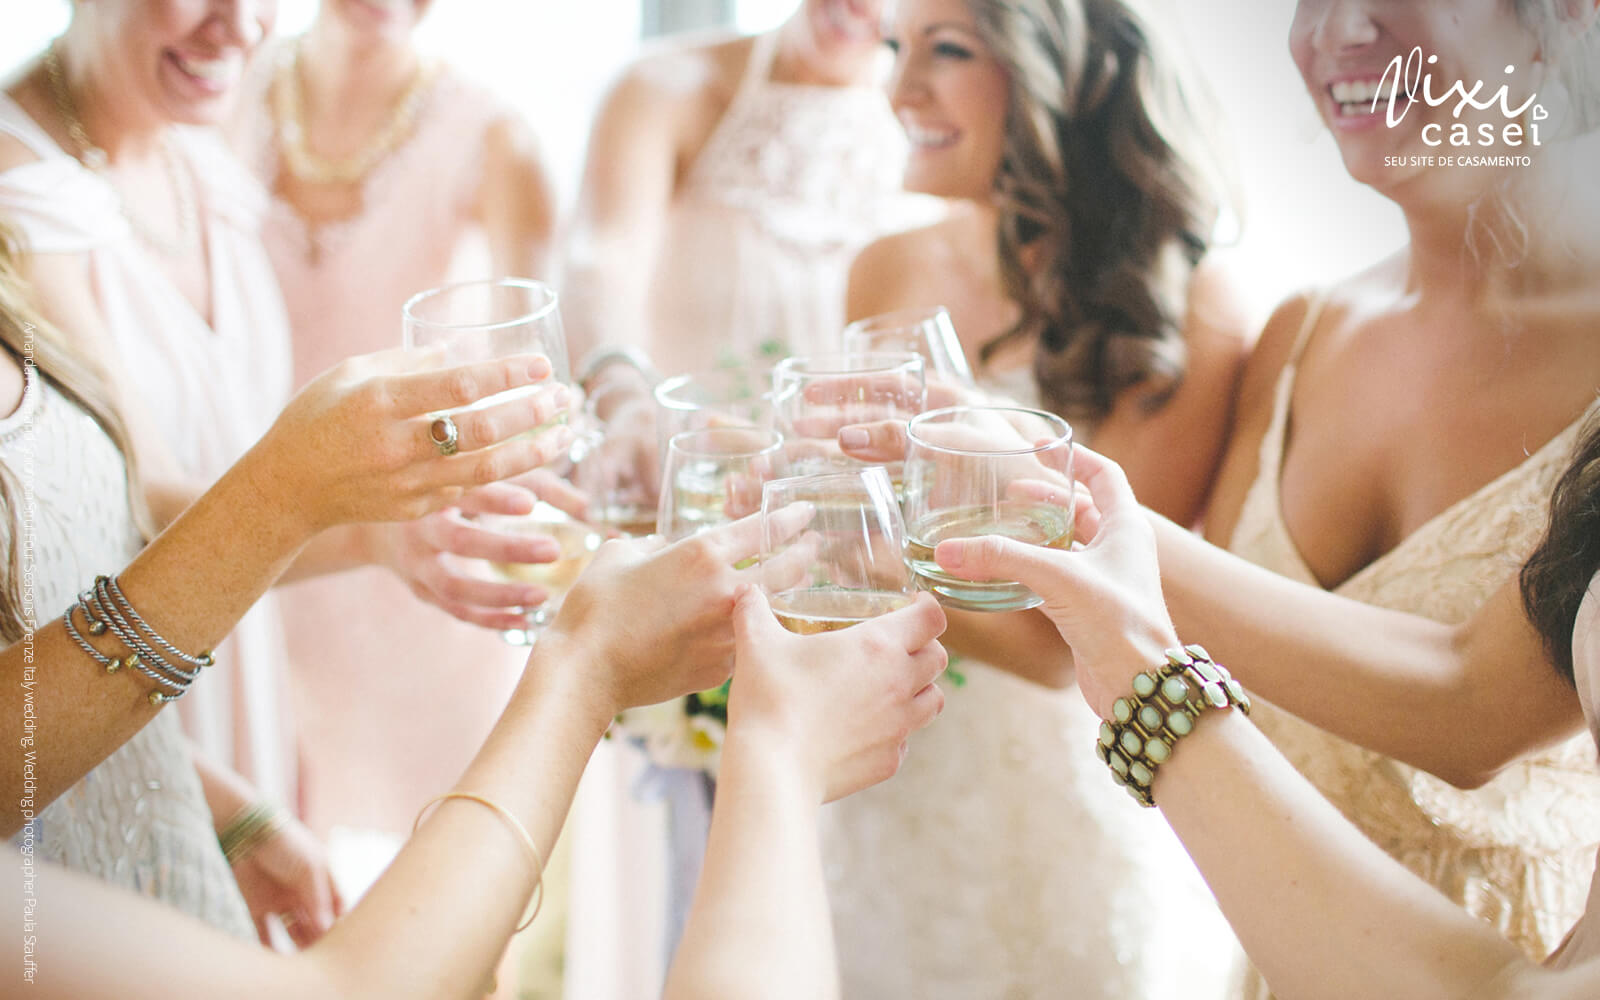 Roupa para casamento: dicas incríveis para convidados por estilo